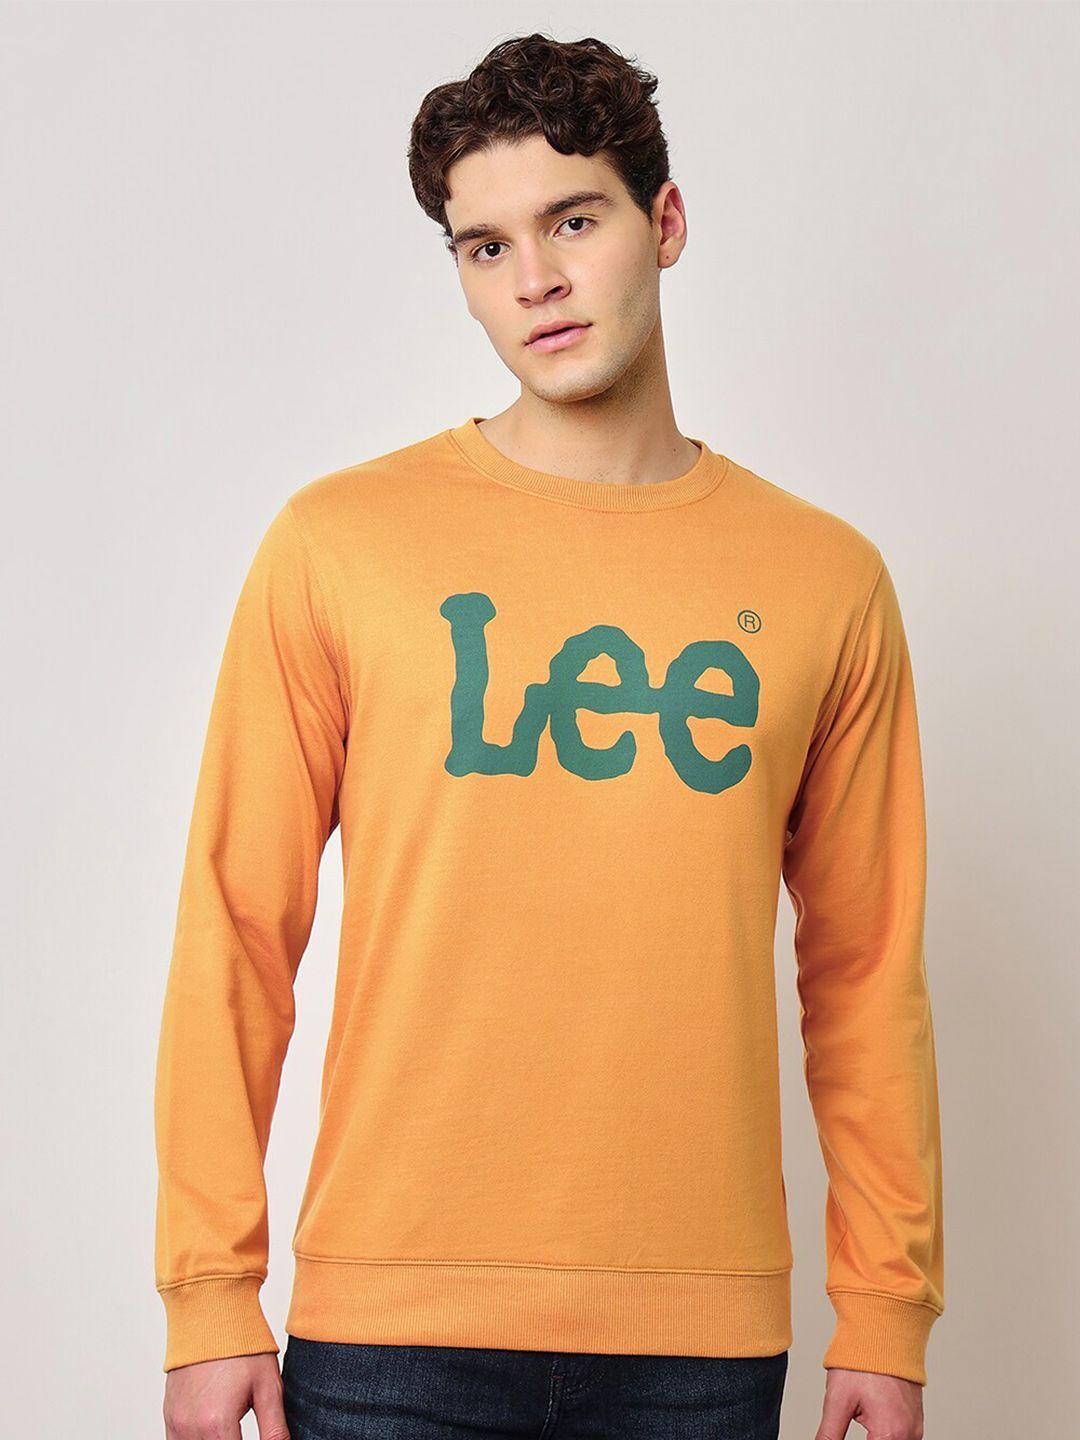 lee brand logo printed cotton sweatshirt